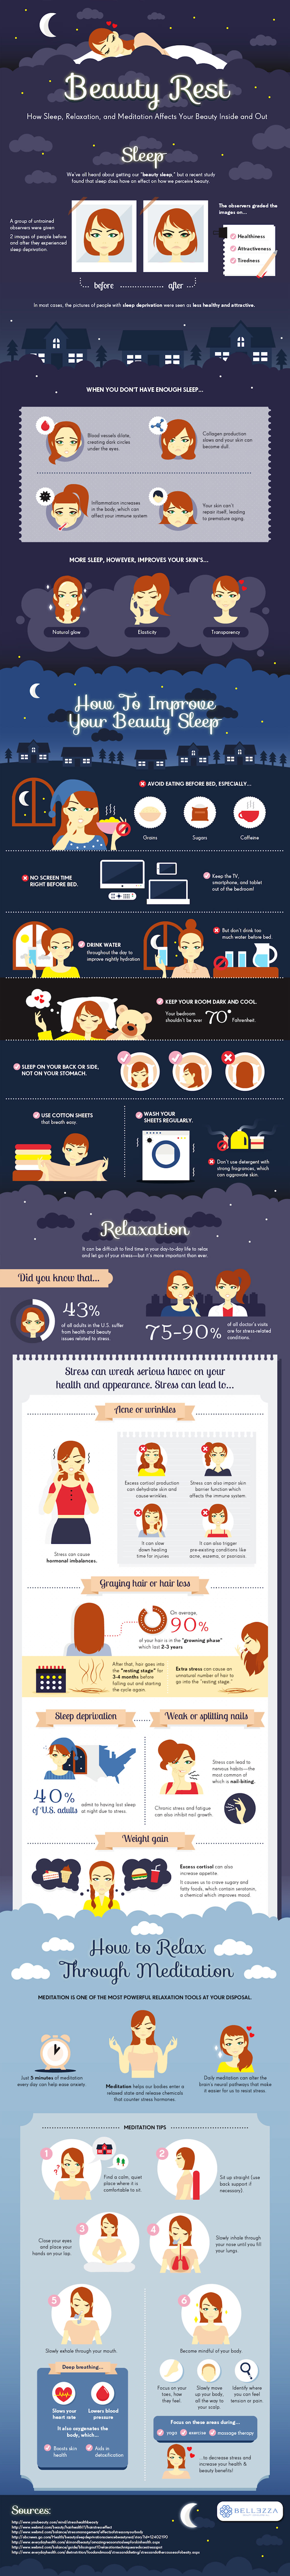 Beauty Benefits of a Good Night Sleep Infographic